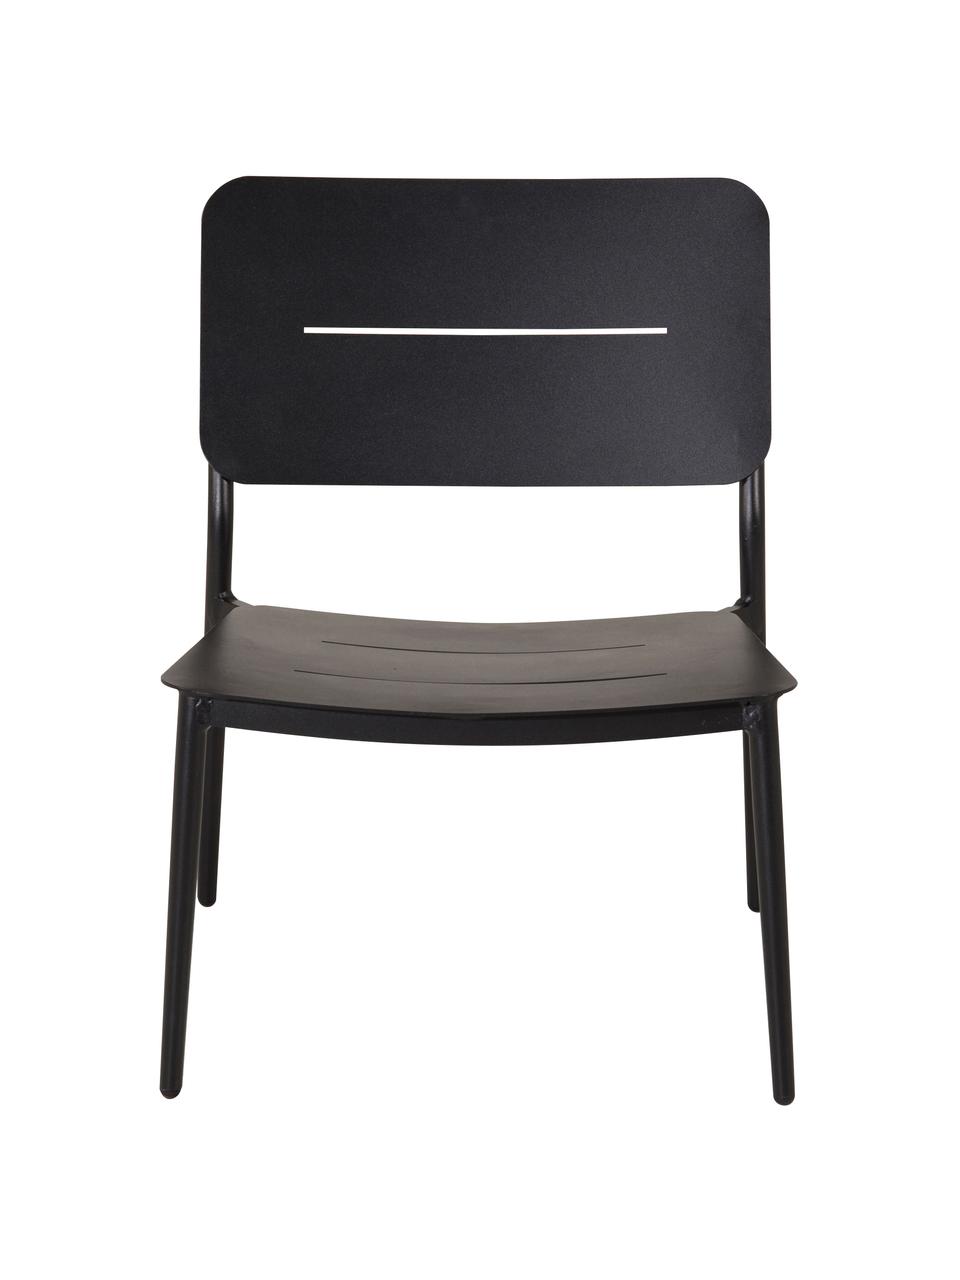 Kovová židle Lina, Kov s práškovým nástřikem, Černá, Š 55 cm, H 59 cm